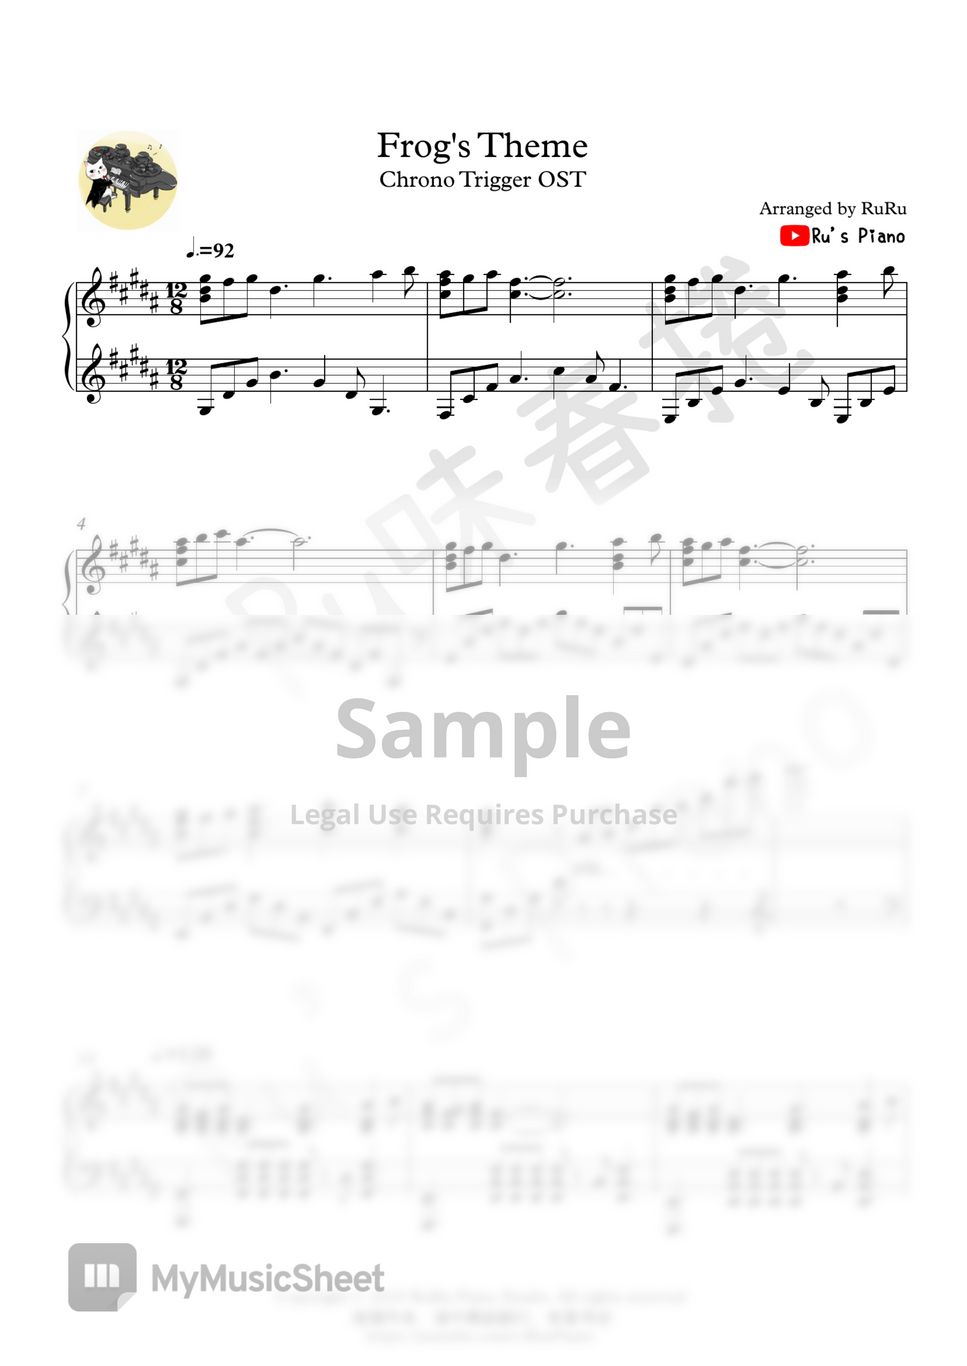 Chrono Trigger - 「カエルのテーマ / Frog's Theme」 (東京オリンピック入場曲) by Ru's Piano